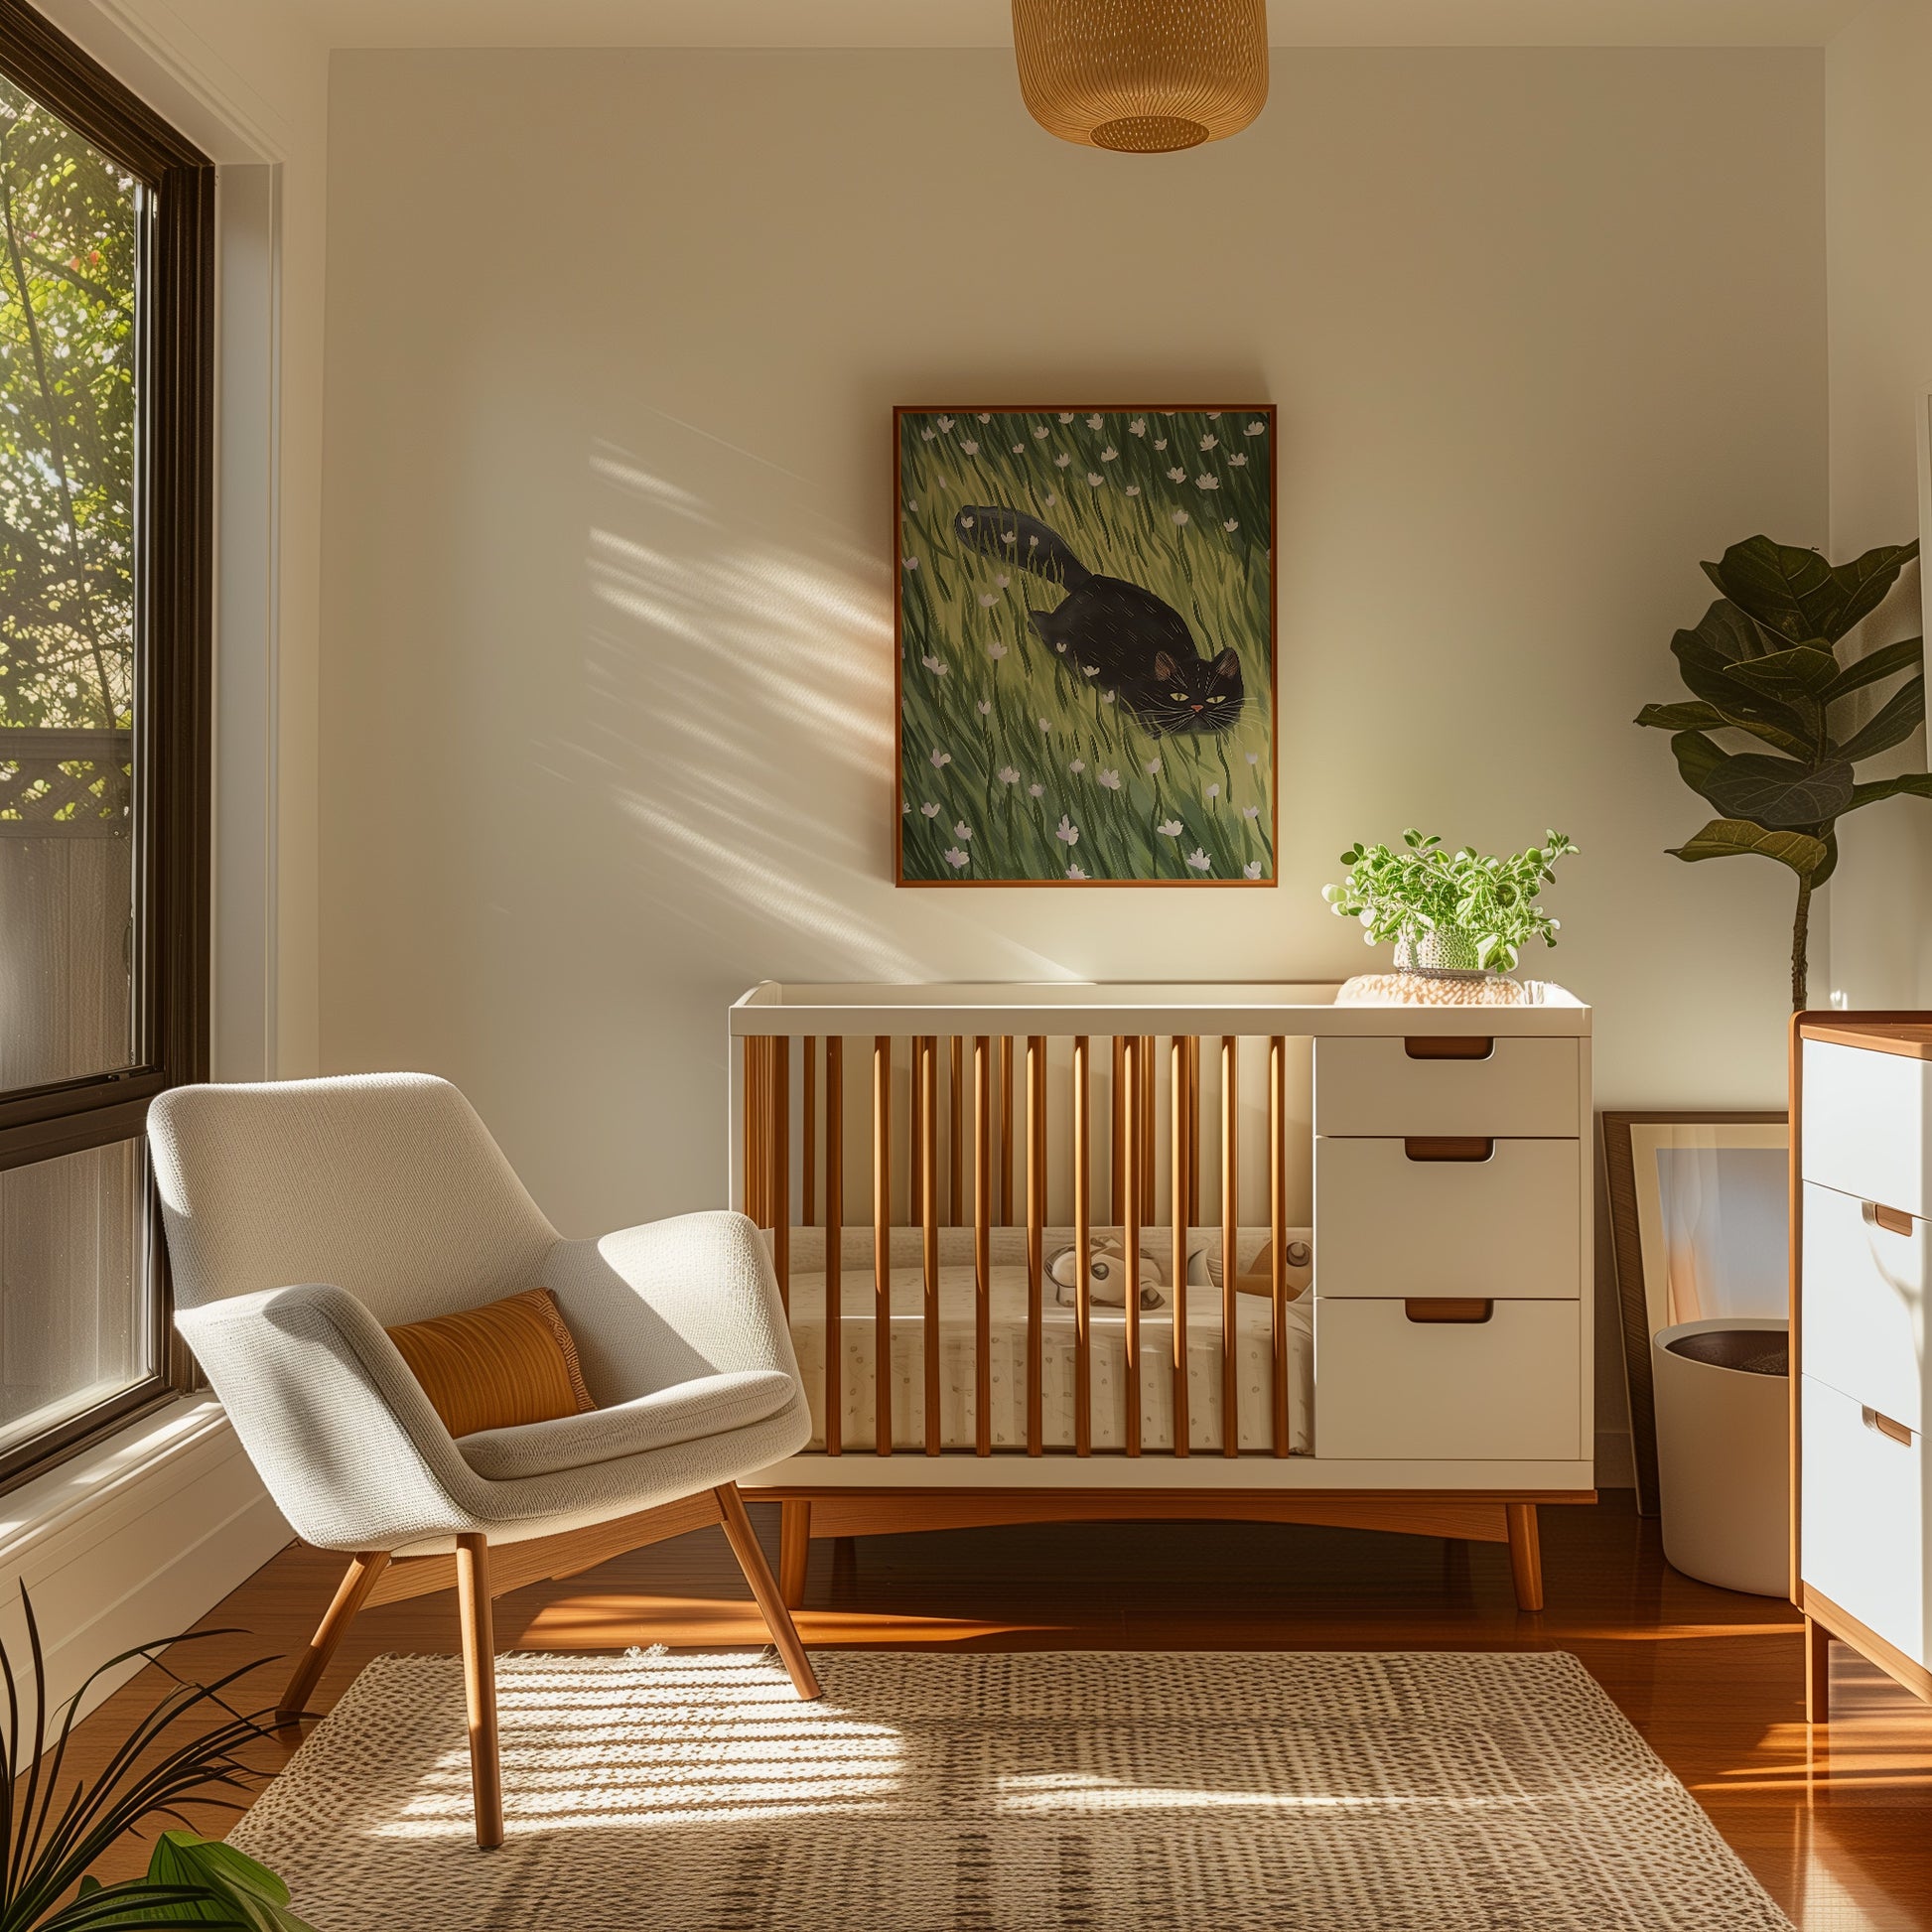 A cozy nursery room with a crib, armchair, and a plant under soft sunlight.